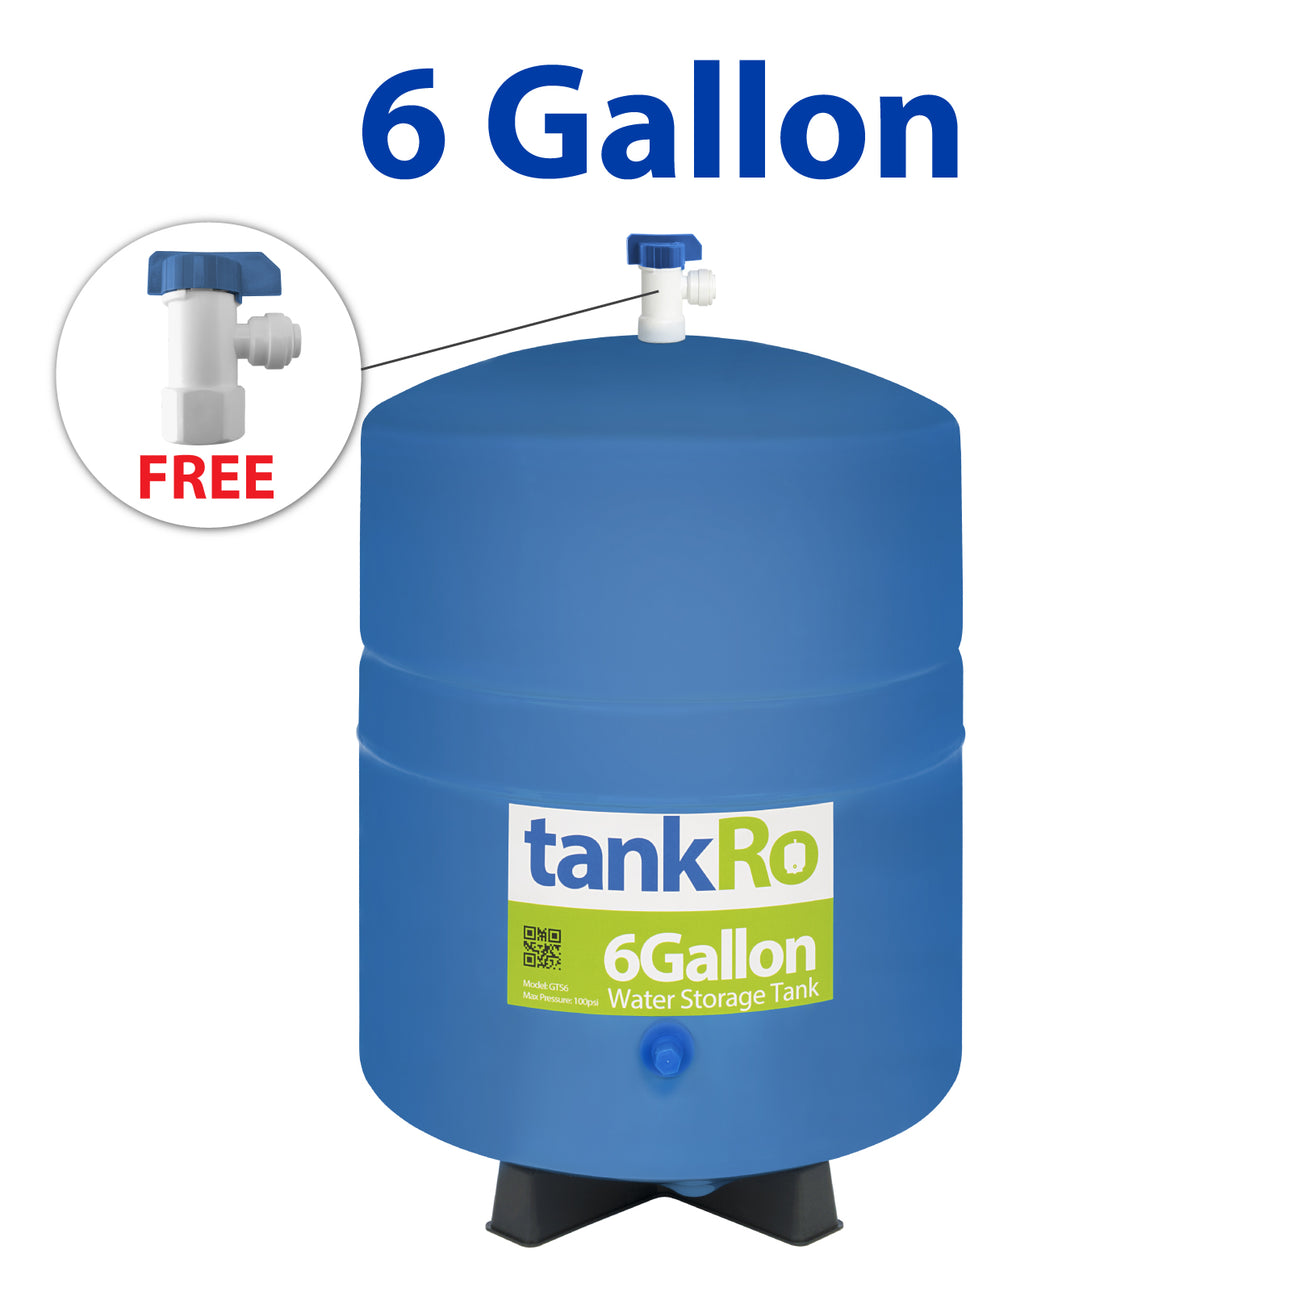 6 Gallon RO Expansion Tank – Compact Reverse Osmosis Water Storage Pressure Tank by tankRO – with FREE Tank Ball Valve - dev-express-water